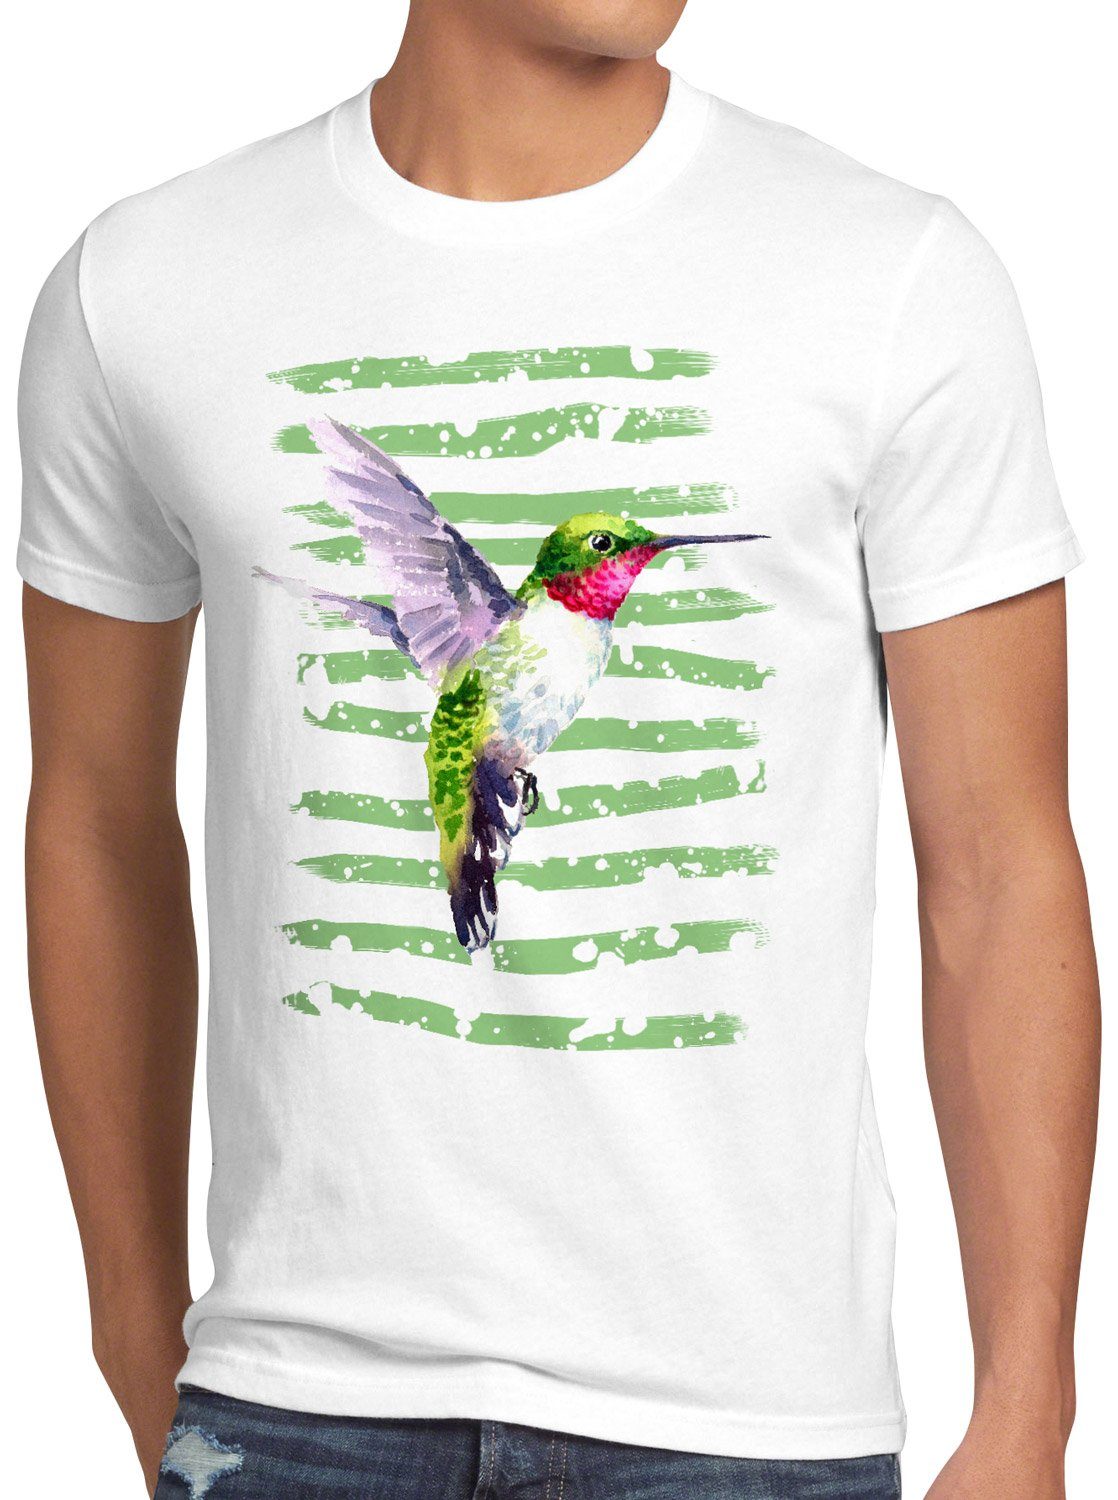 sommer style3 Kolibri regenwald Print-Shirt T-Shirt Herren dschungel